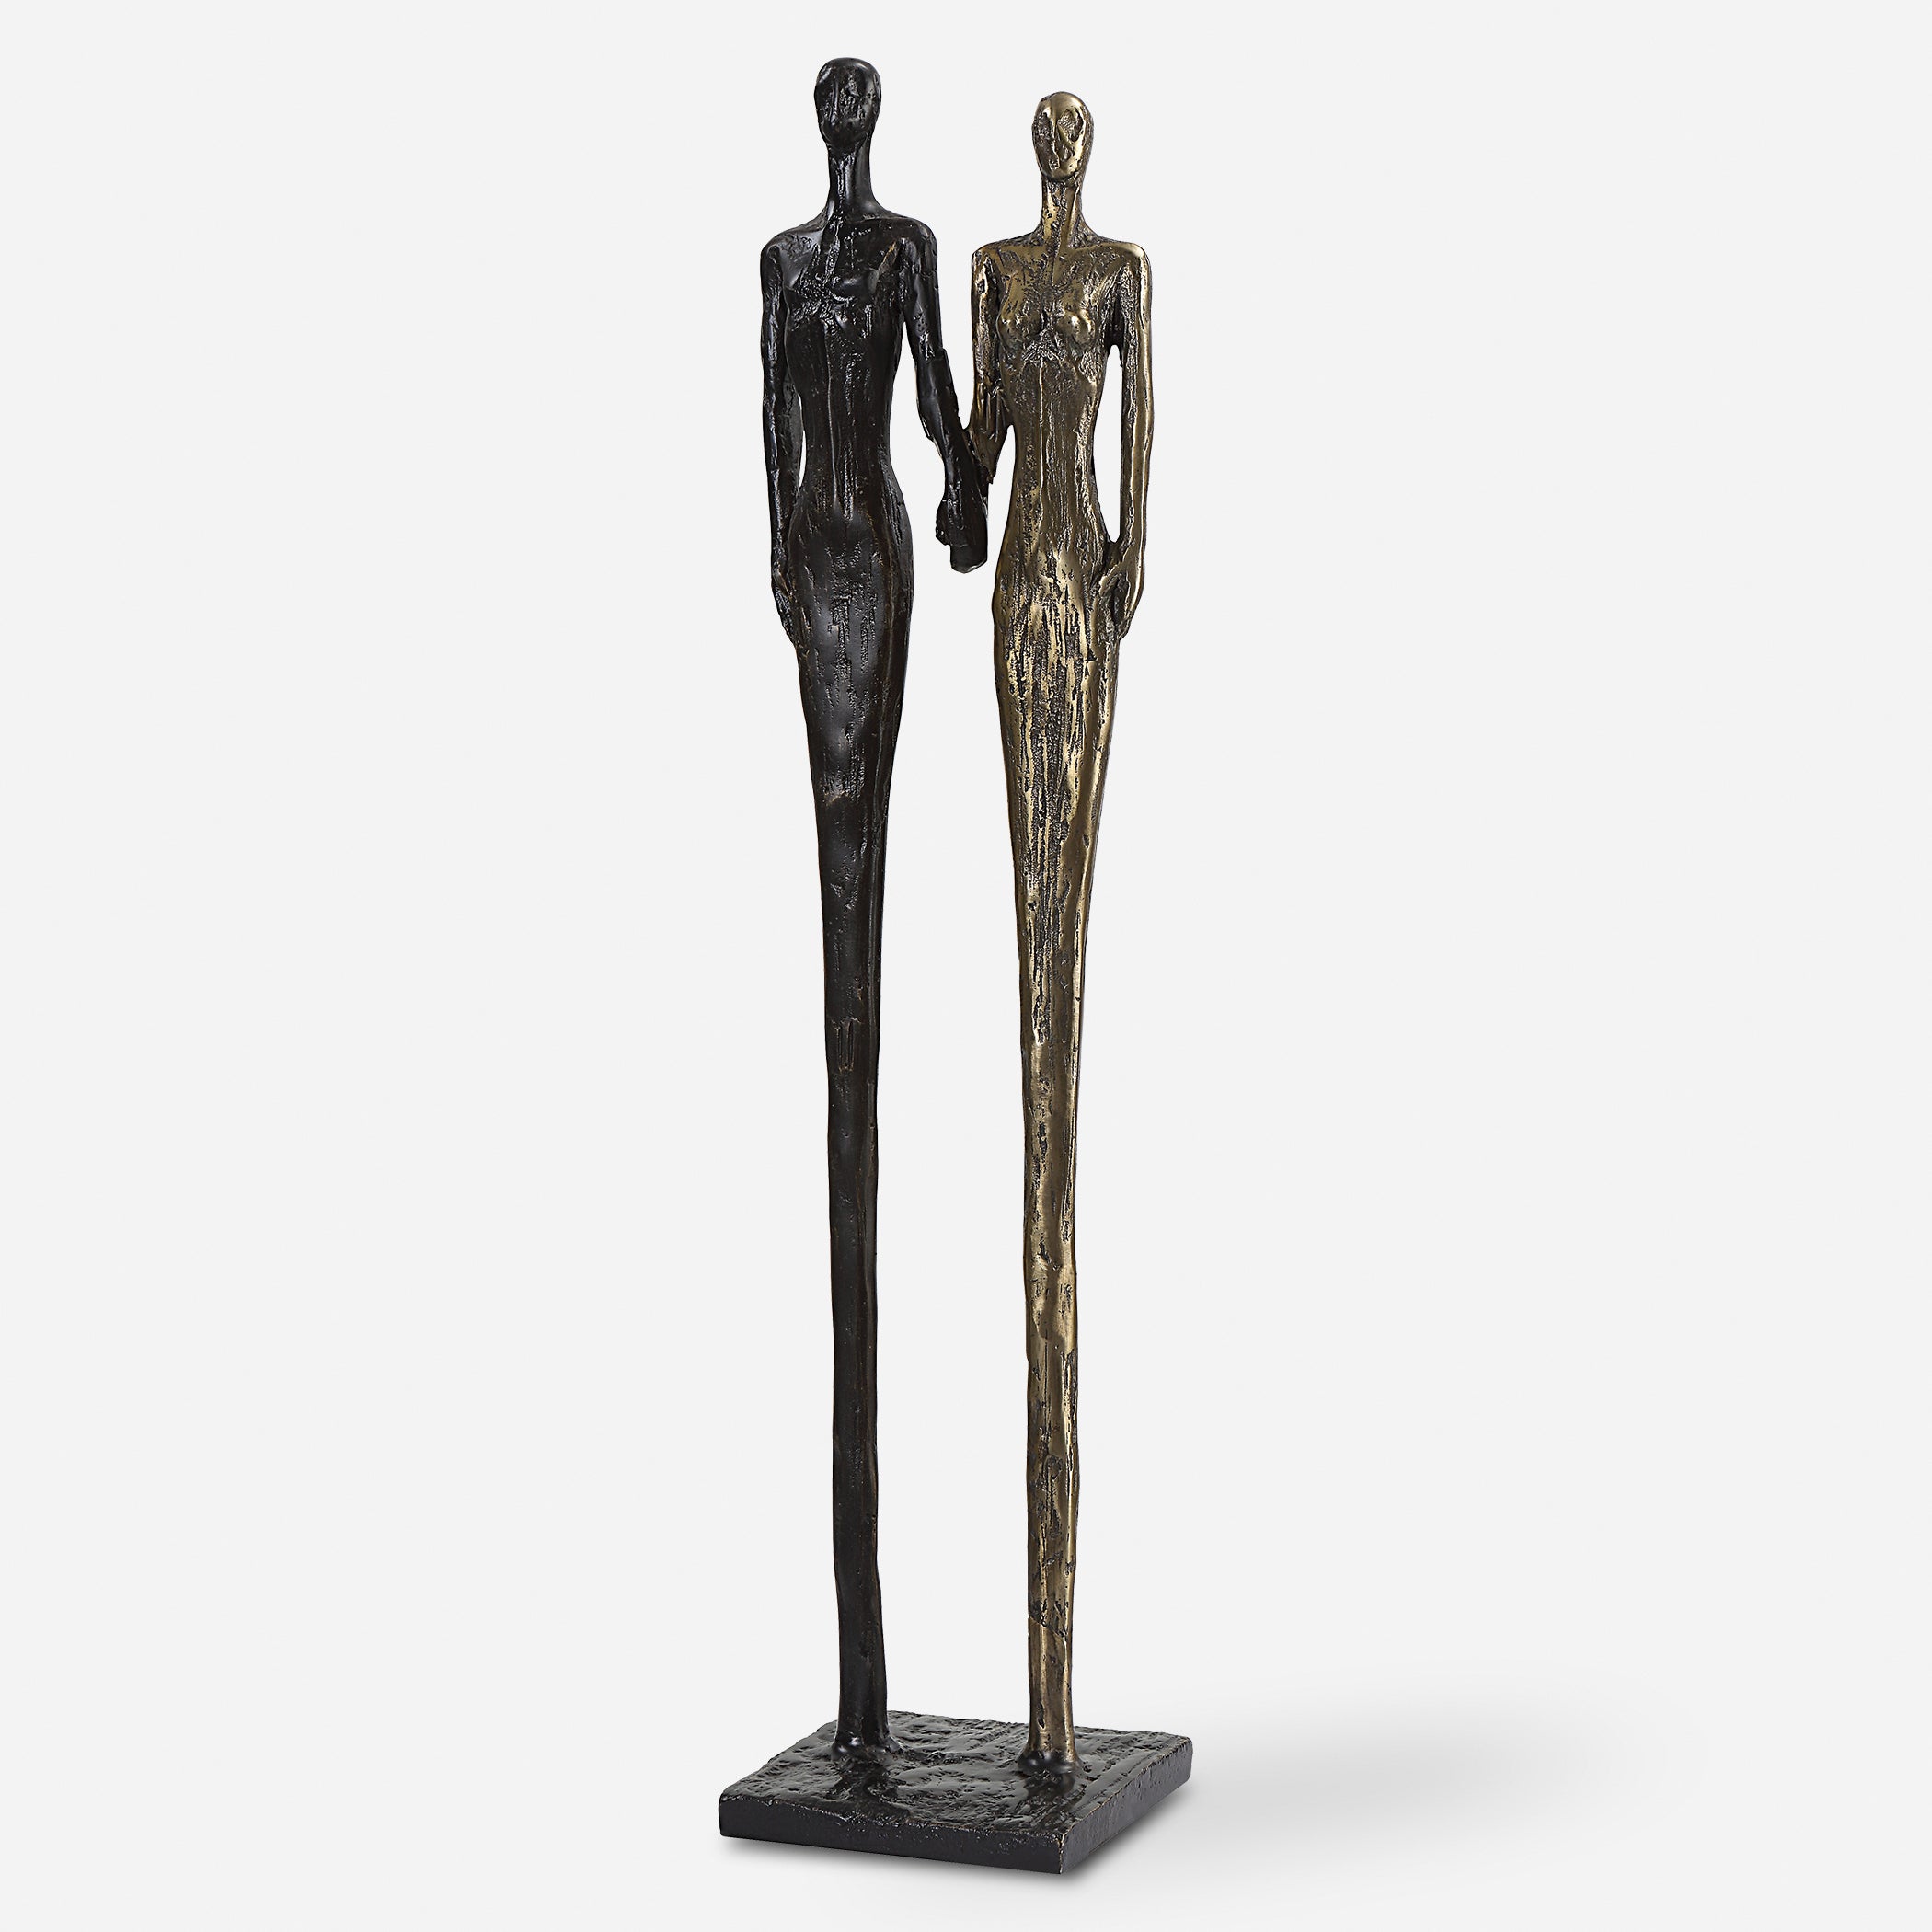 Uttermost Two's Figurines & Sculptures Figurines & Sculptures Uttermost   